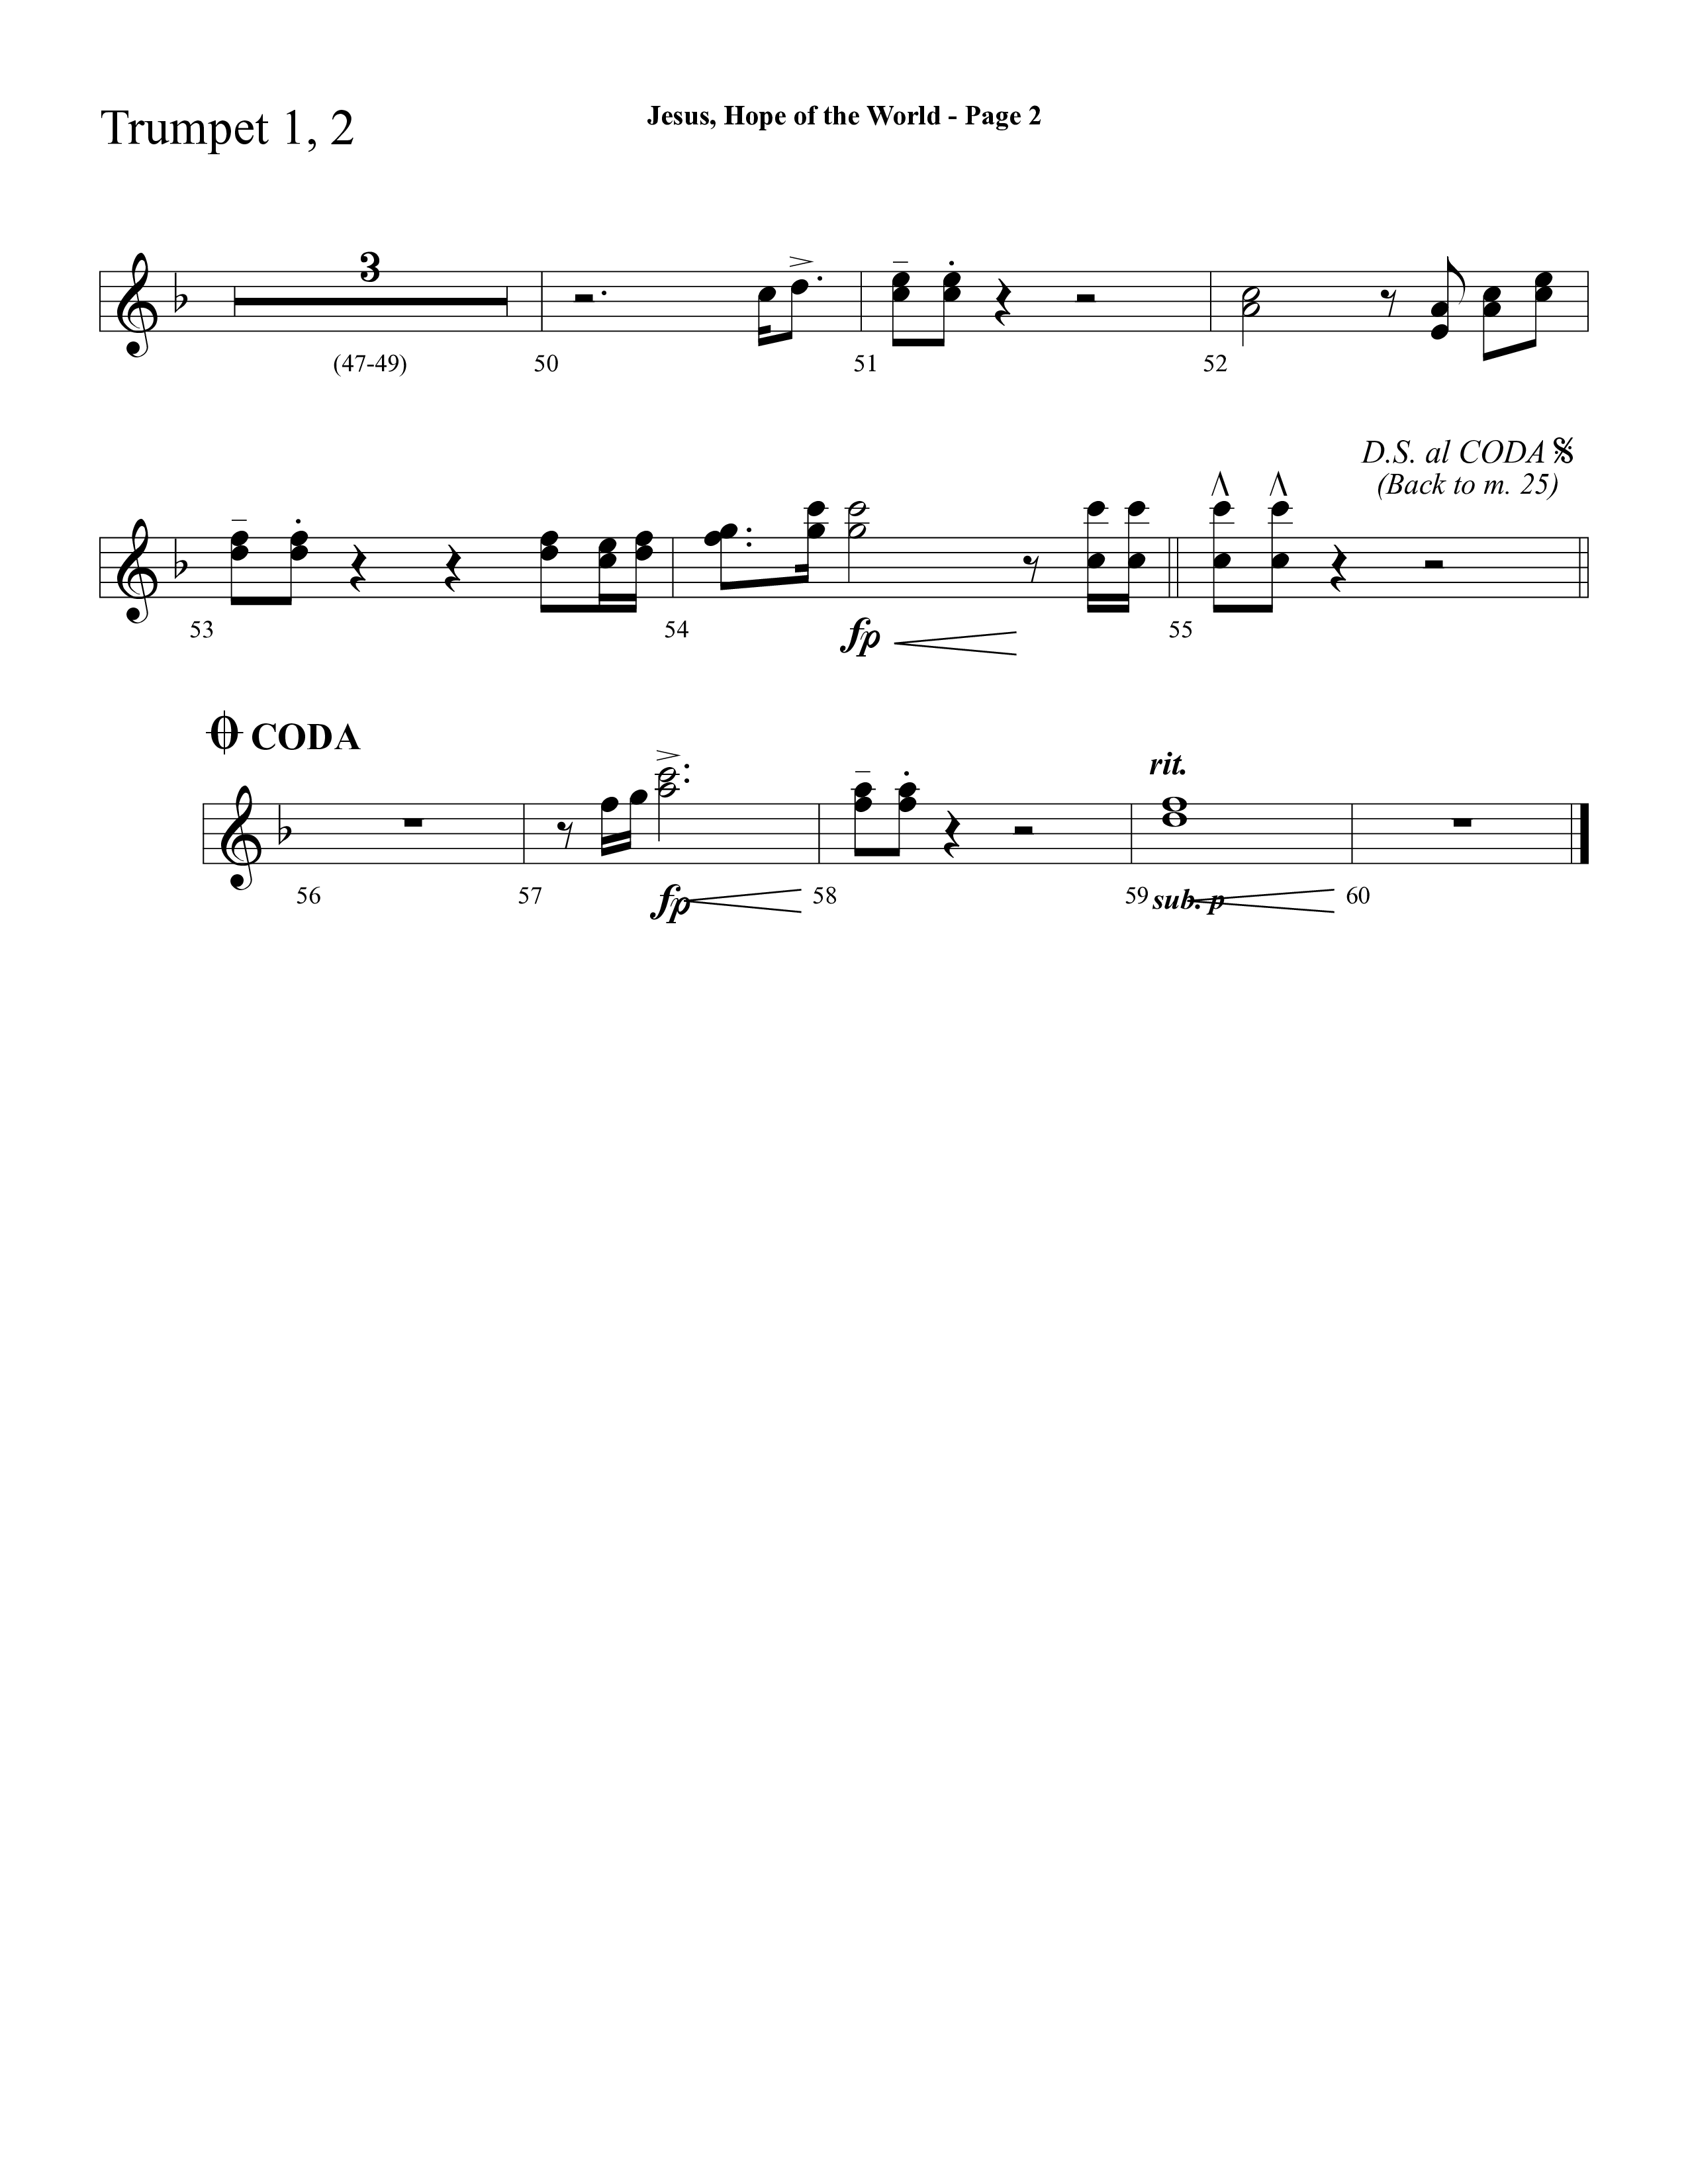 Jesus Hope Of The World (Choral Anthem SATB) Trumpet 1,2 (Lifeway Choral / Arr. Mark Willard / Orch. Stephen K. Hand / Orch. Phillip Keveren)